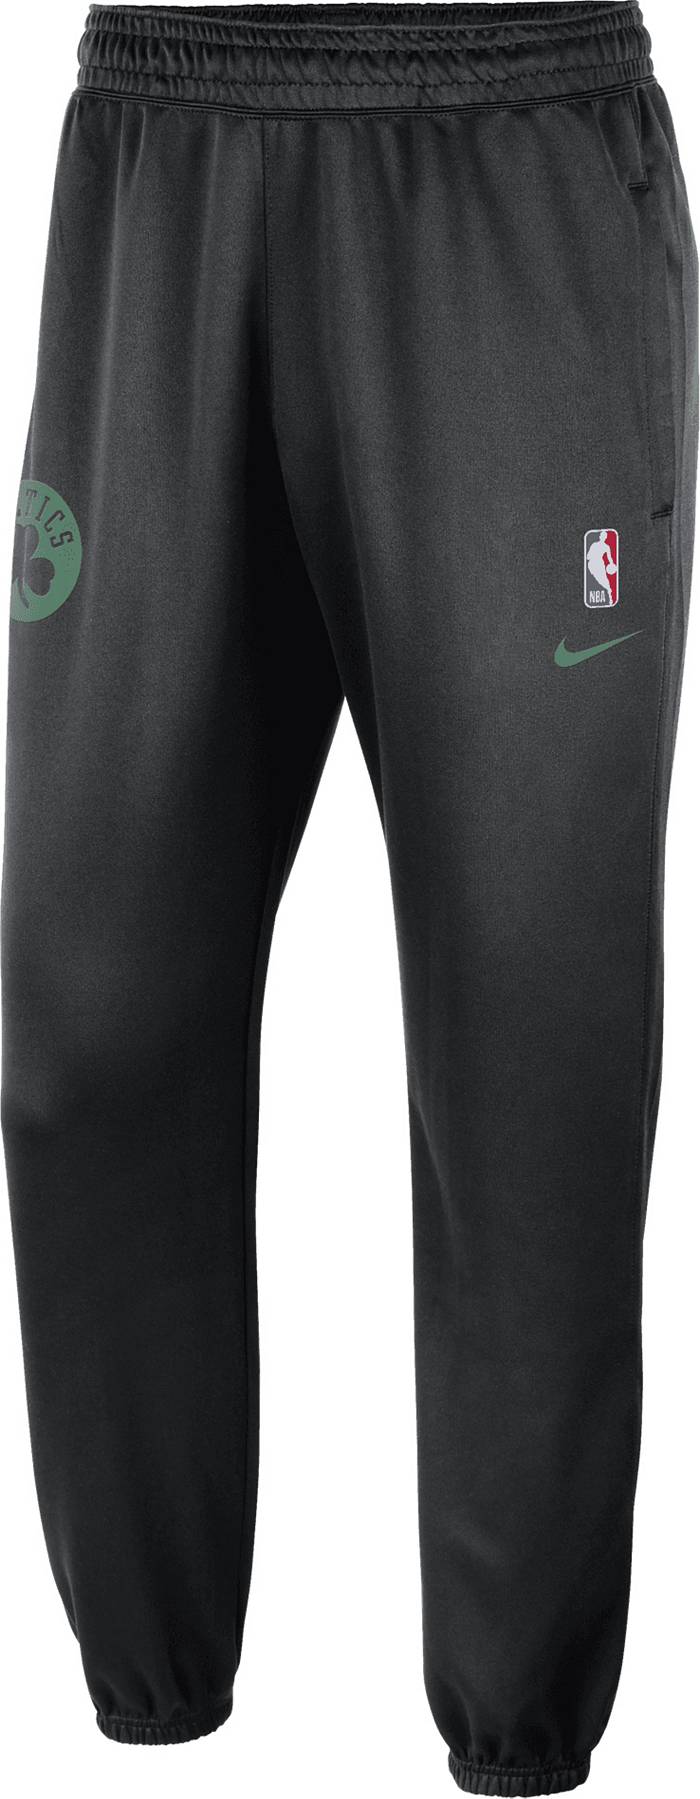 Nike Men's Boston Celtics Jaylen Brown #7 Black T-Shirt, Large